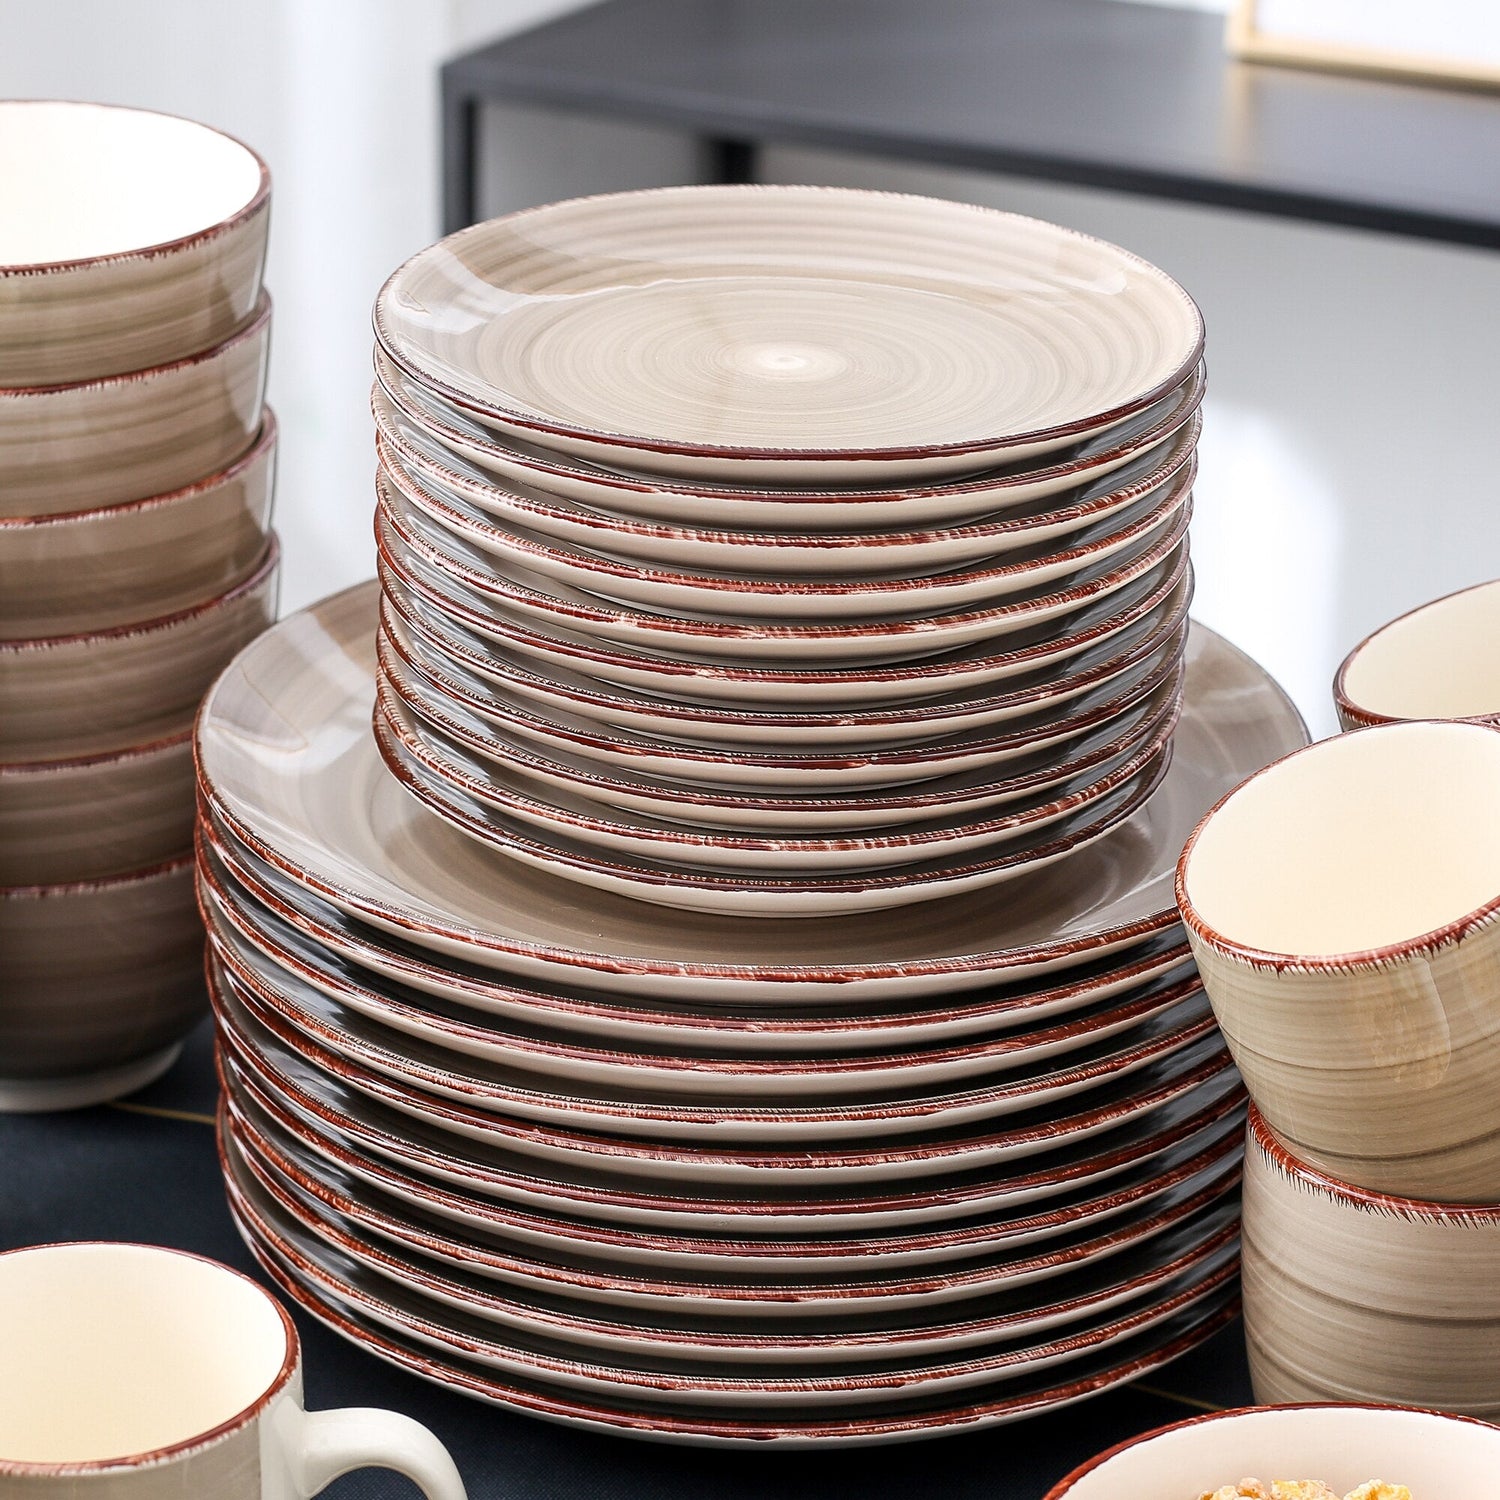 Bella-C 48-Pieces Porcelain Dinner Set - Nordic Side - 12, 48, BellaC, Ceramic, Dinner, Look, Pieces, Plate, PlateBowlMug, PlateDessert, Porcelain, Set, Vancasso, Vintage, with